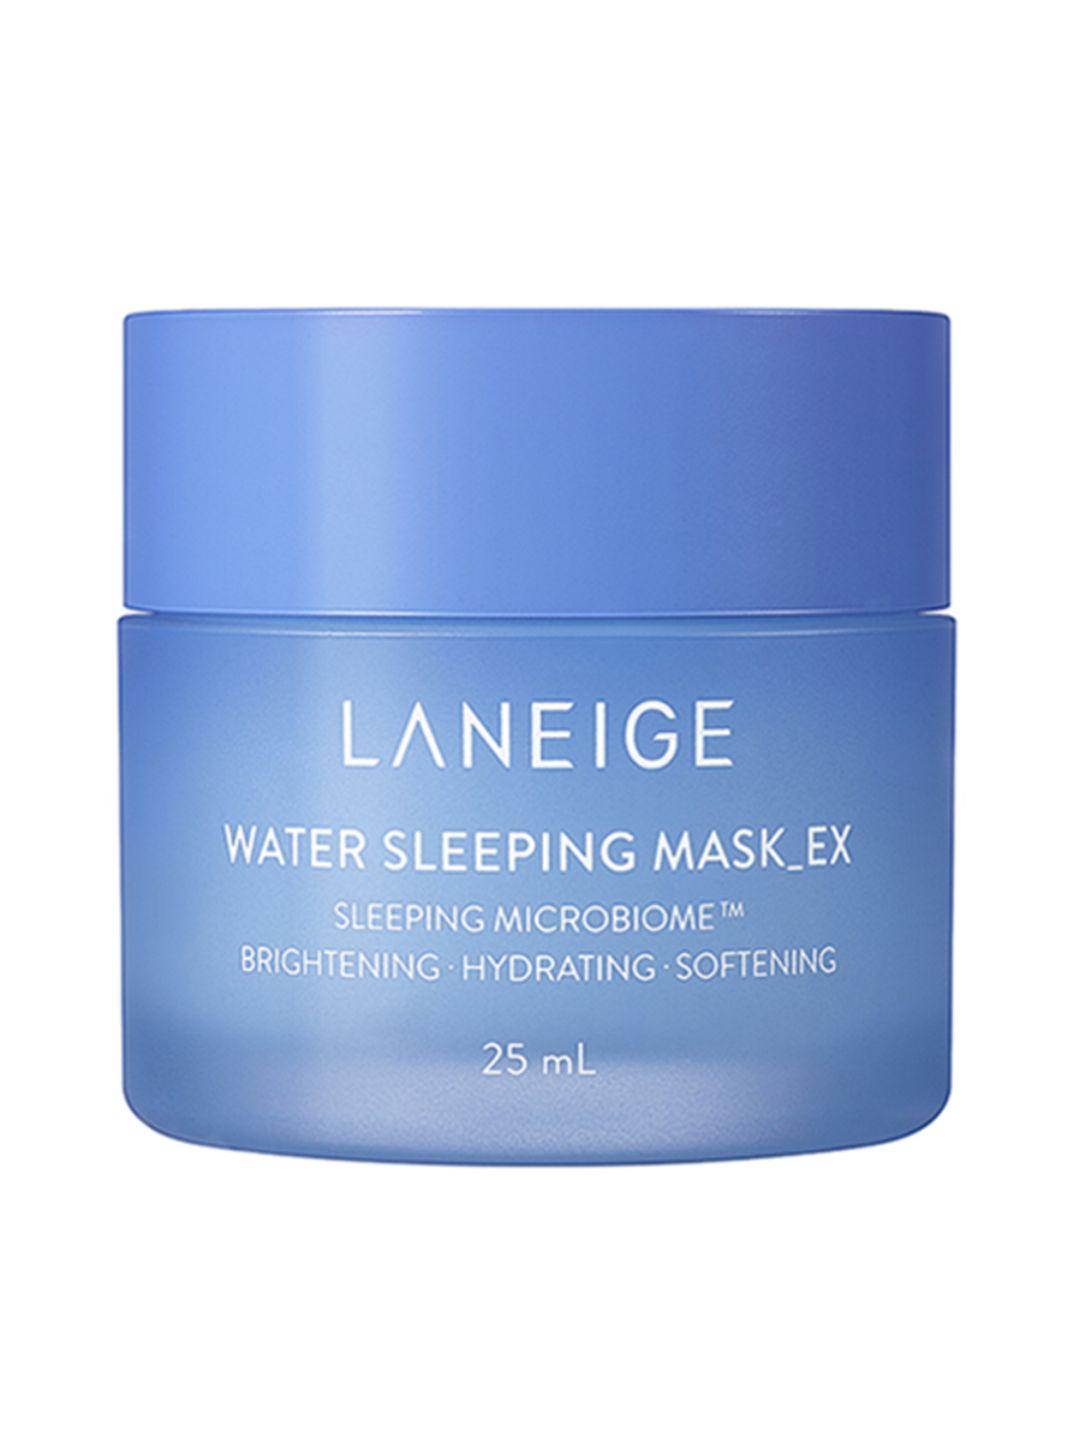 laneige water sleeping mask ex for brightening & hydrating skin - 25 ml